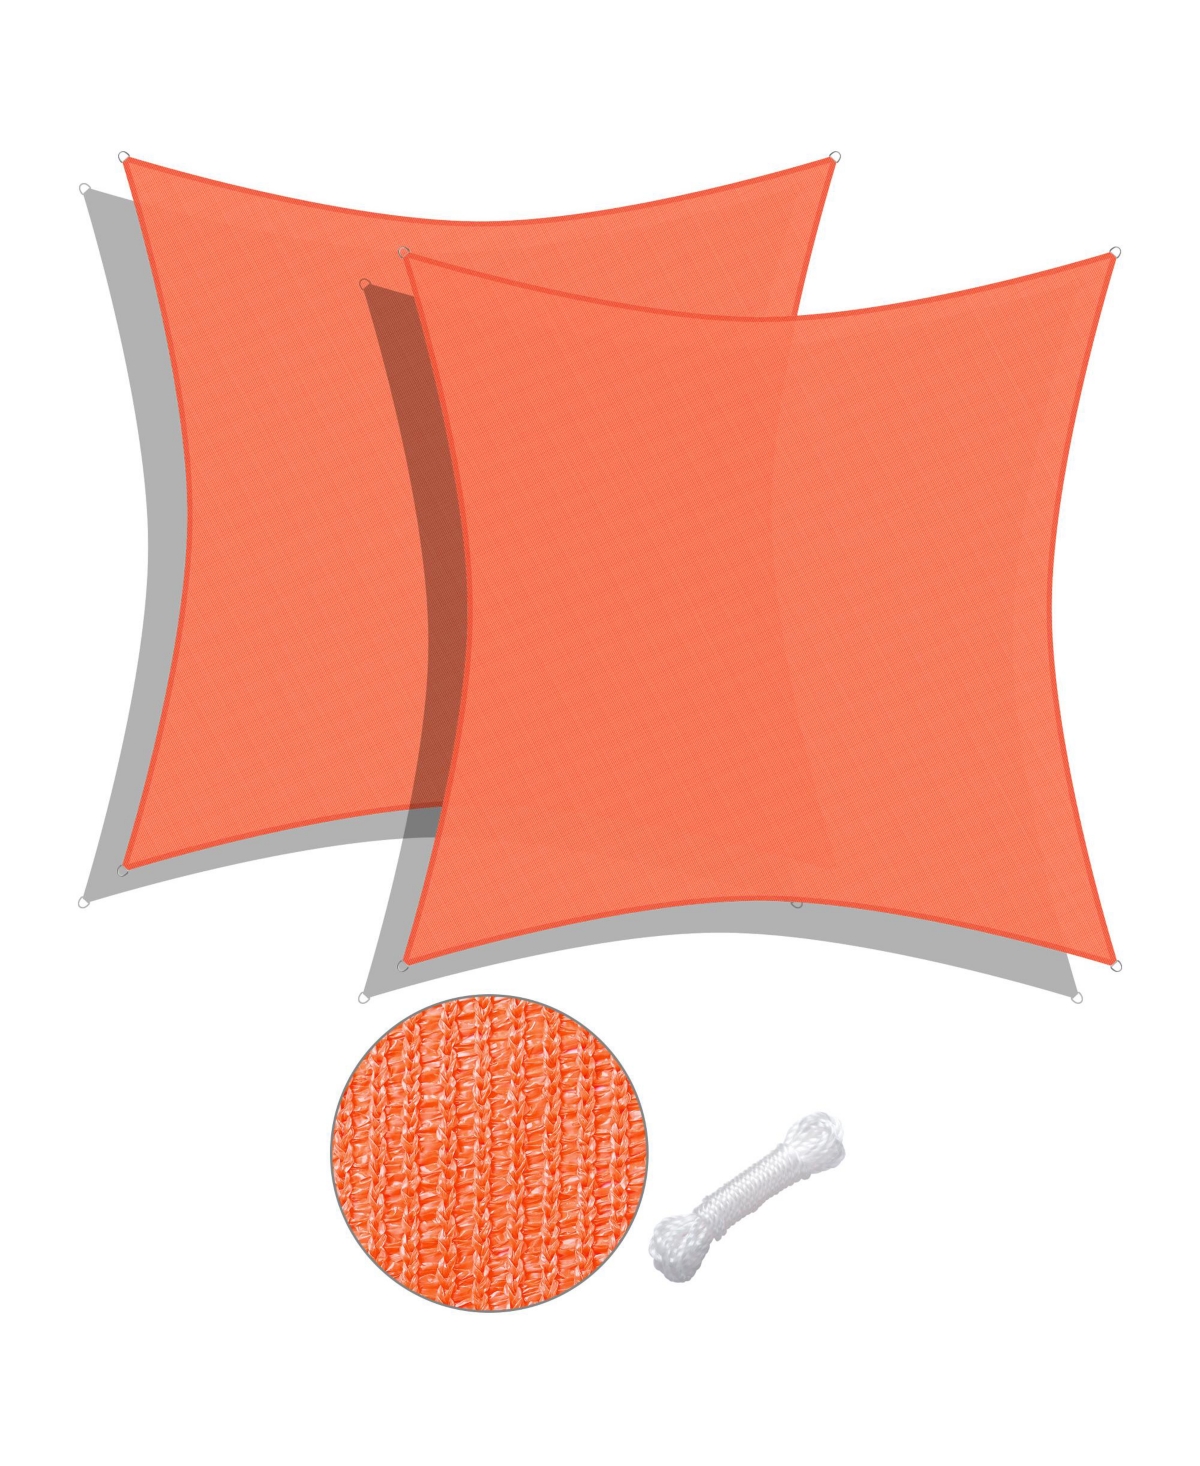 2 Pack 18x18 Ft 97% Uv Block Square Sun Shade Sail Canopy Outdoor Patio Poolside - Bright orange